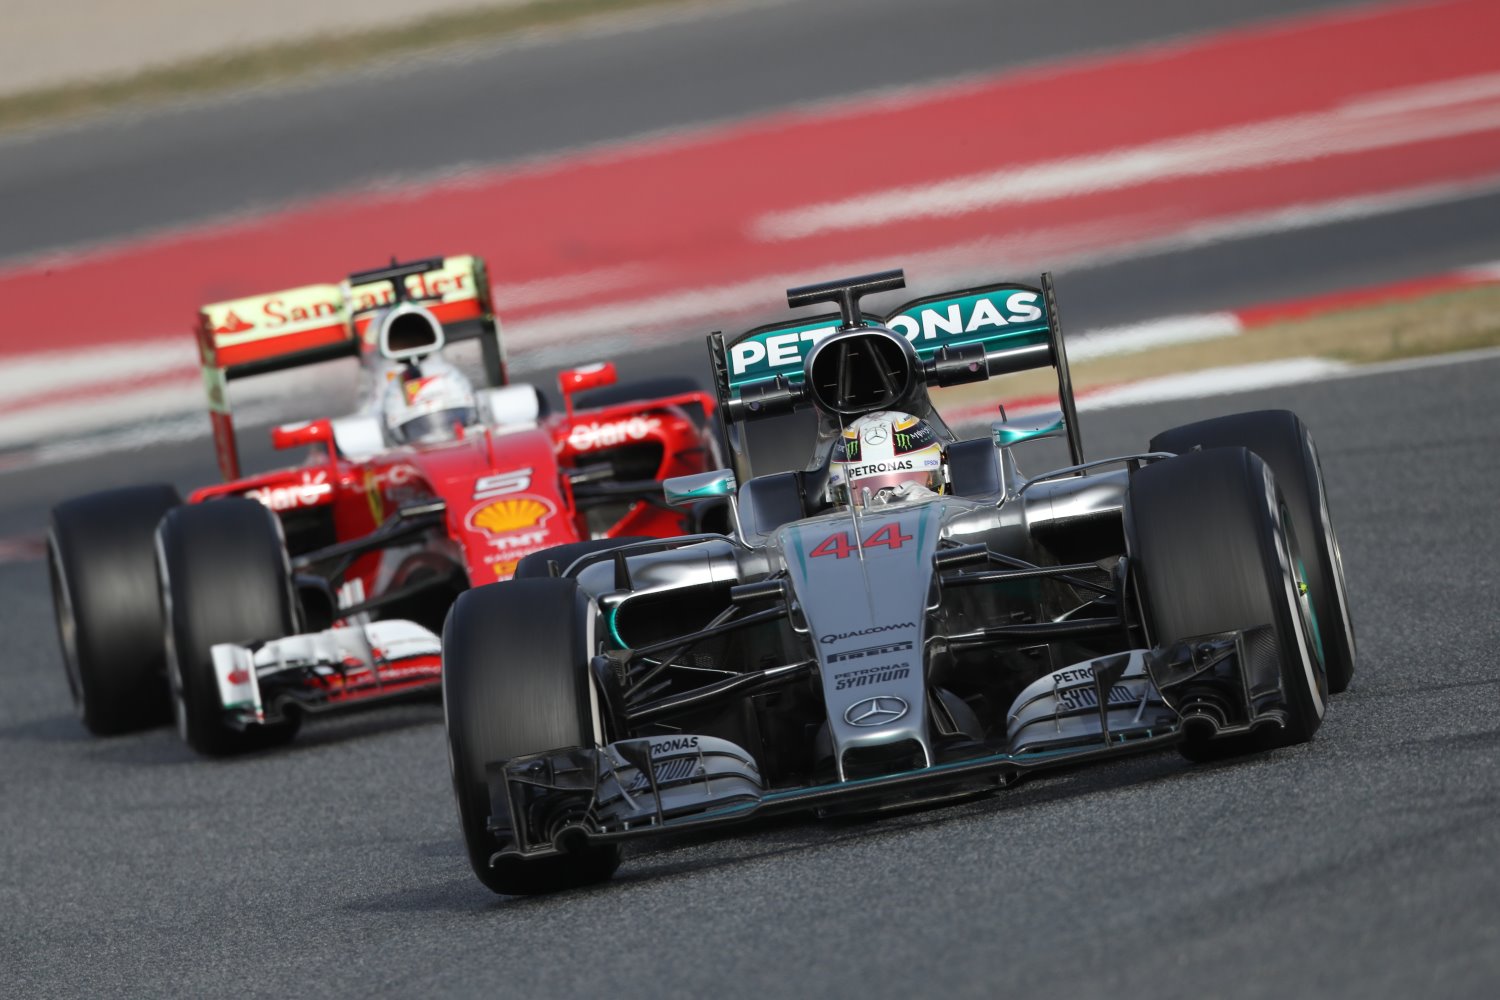 g inhaling Mercedes exhaust fumes.Preseason testing saw Vettel's Ferrari practin